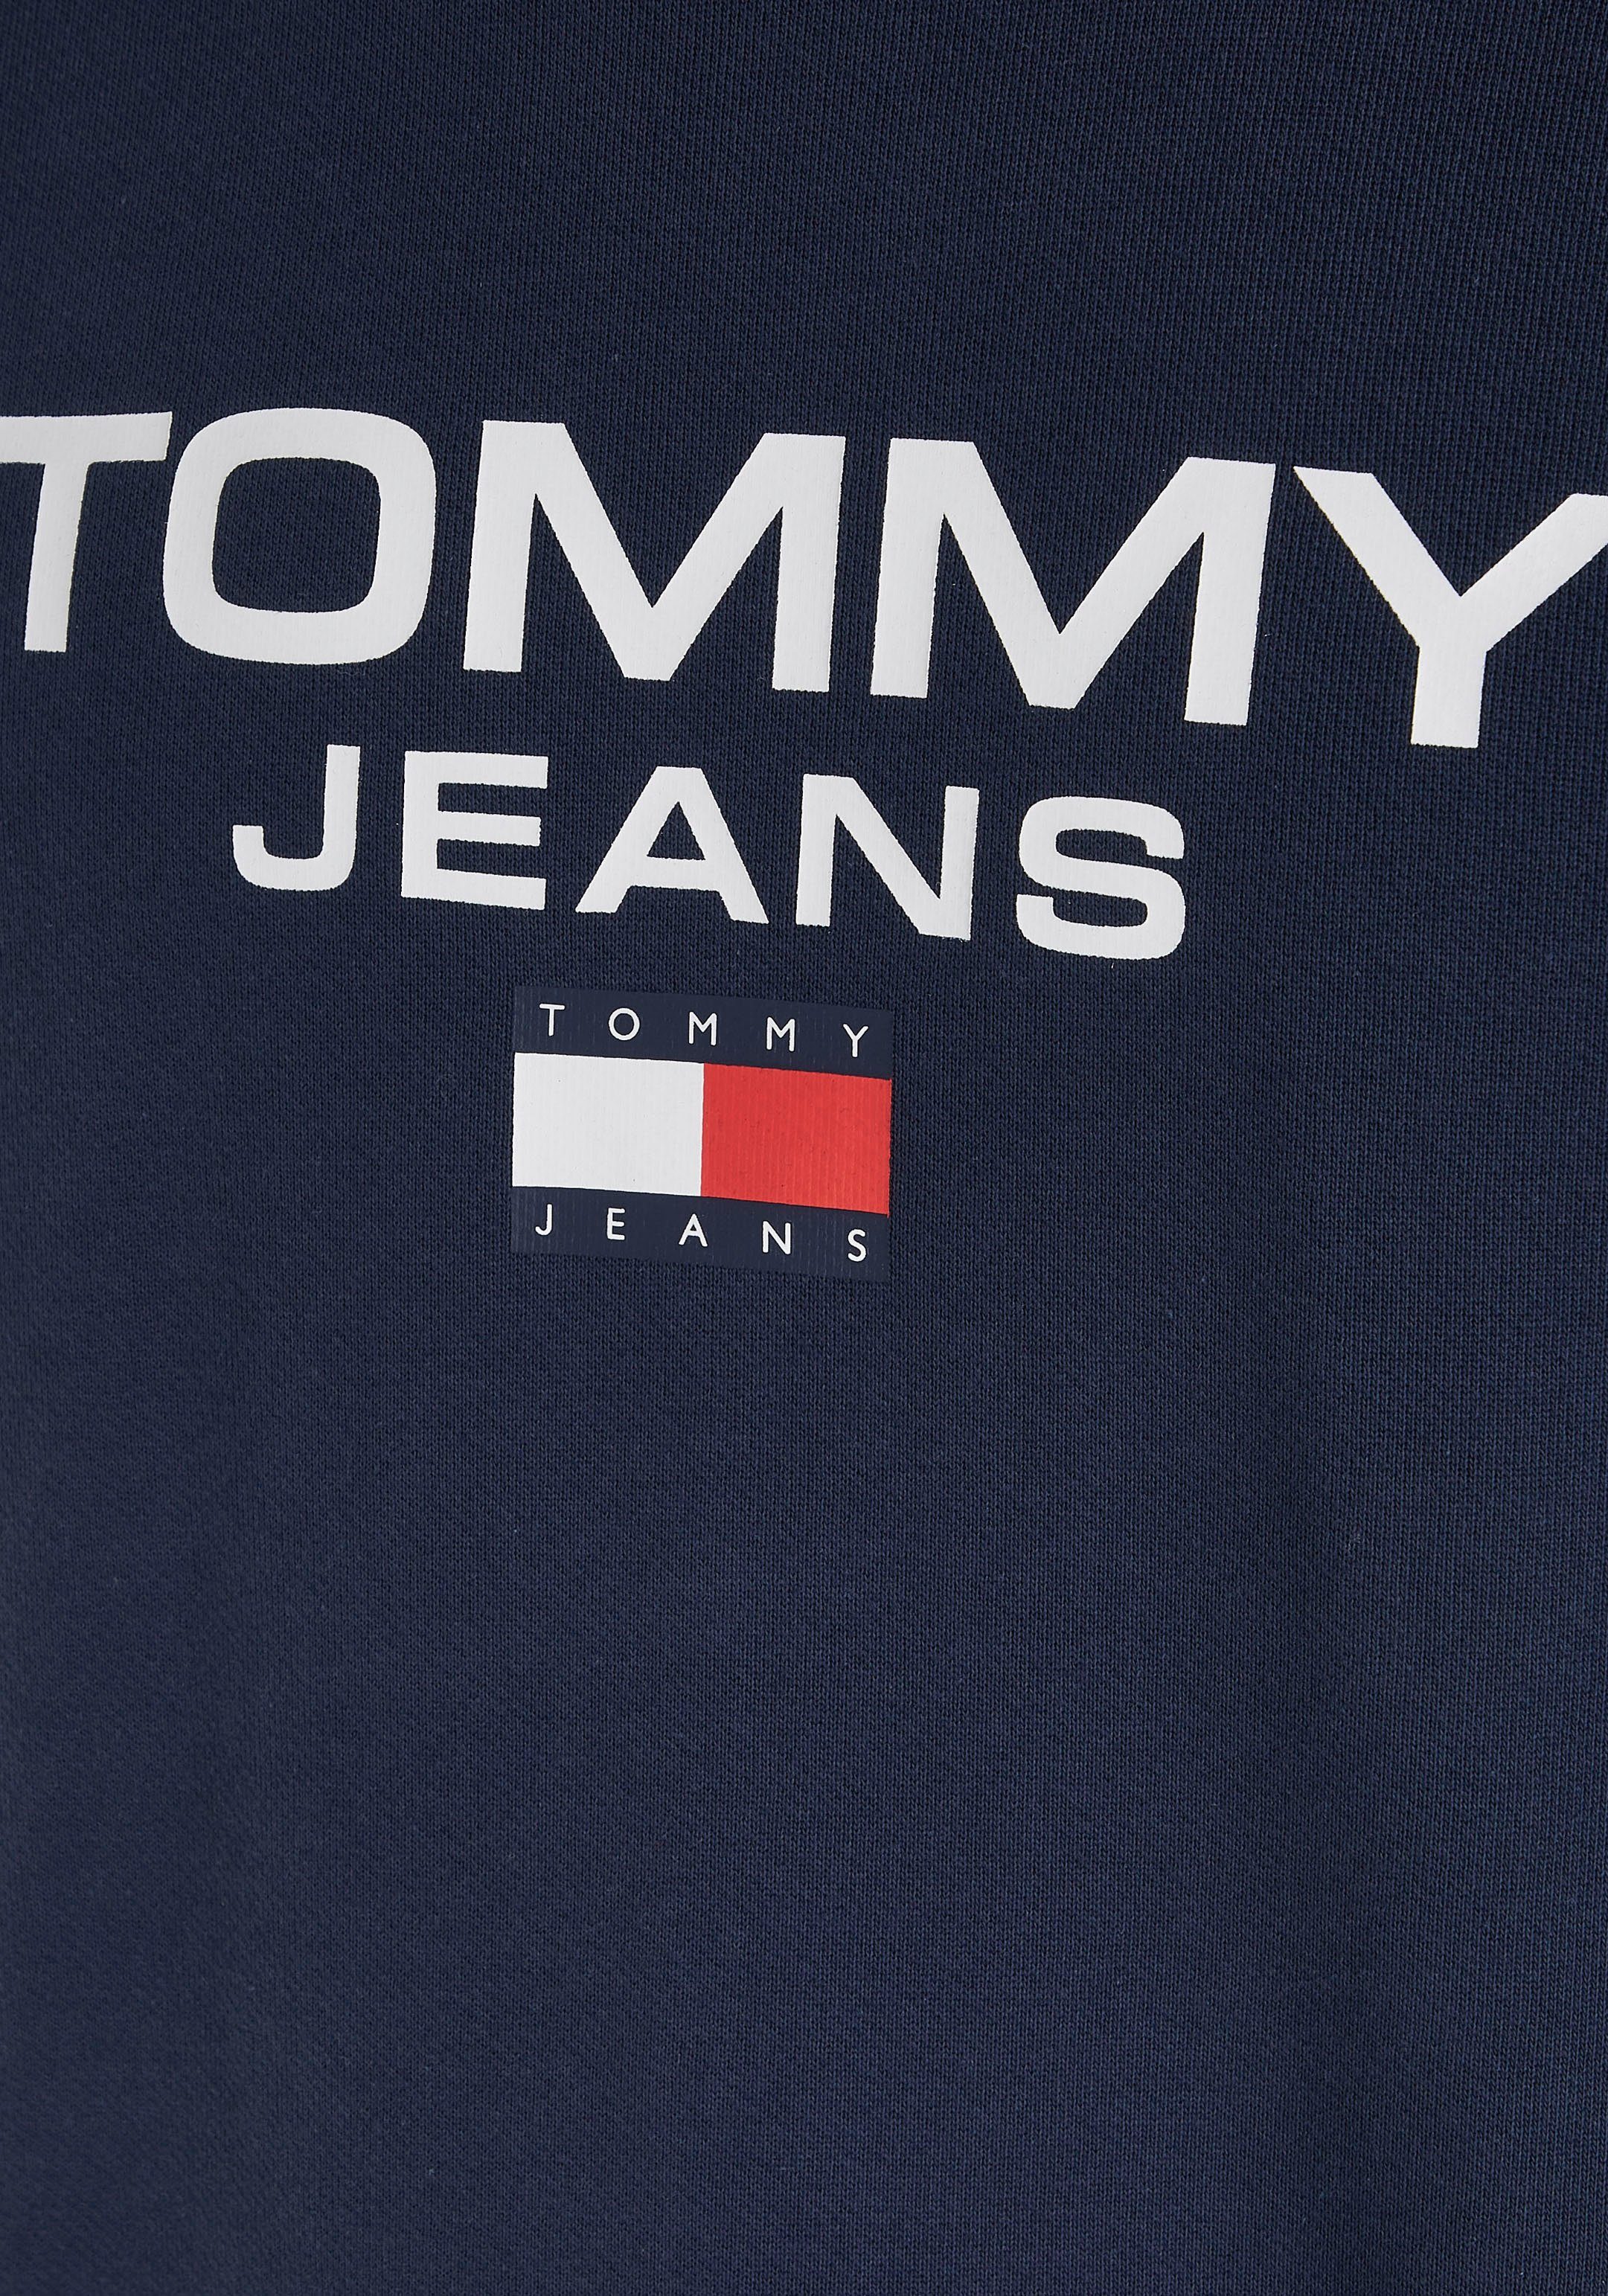 Tommy Jeans mit ENTRY TJM REG Navy Sweatshirt CREW Logodruck Twilight